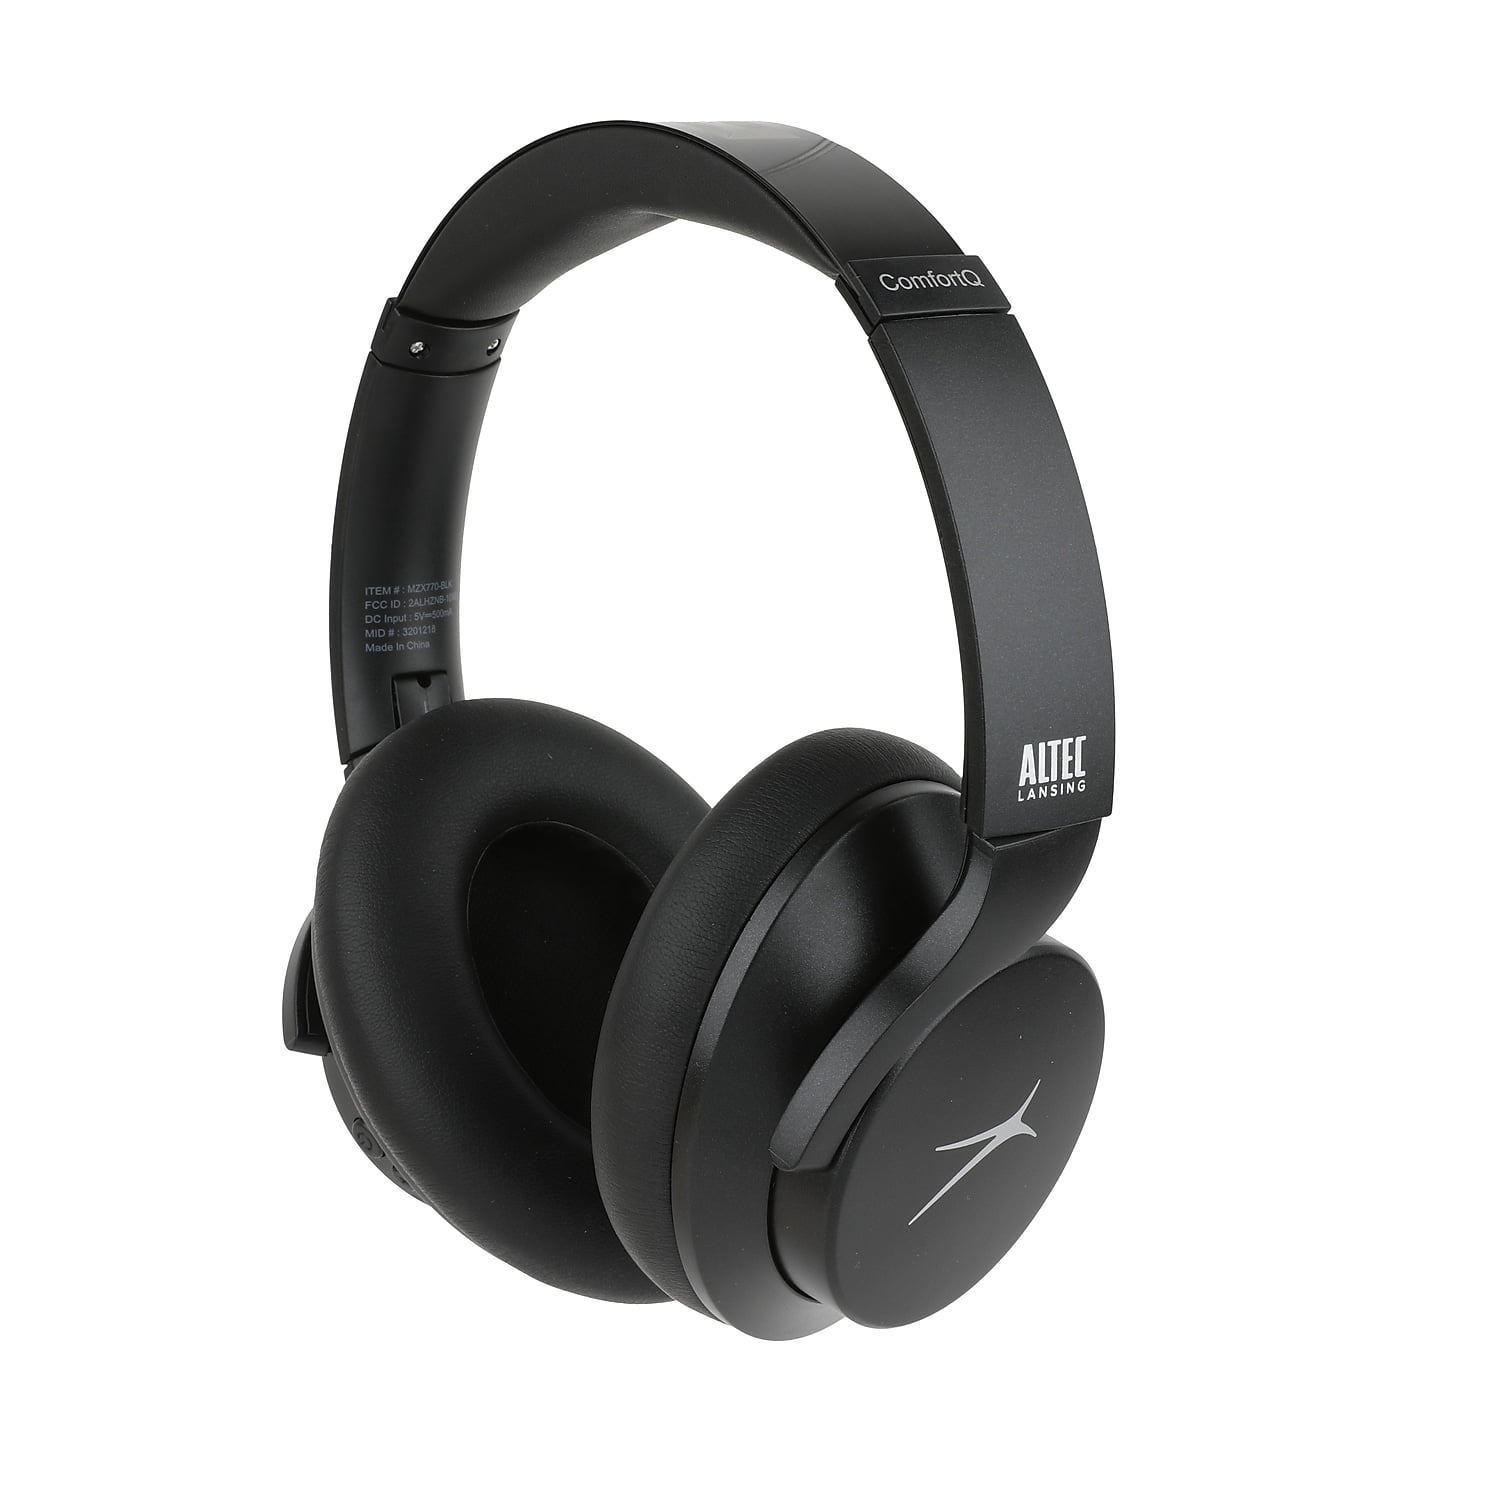 ComfortQ Bluetooth Headphones - Walmart.com